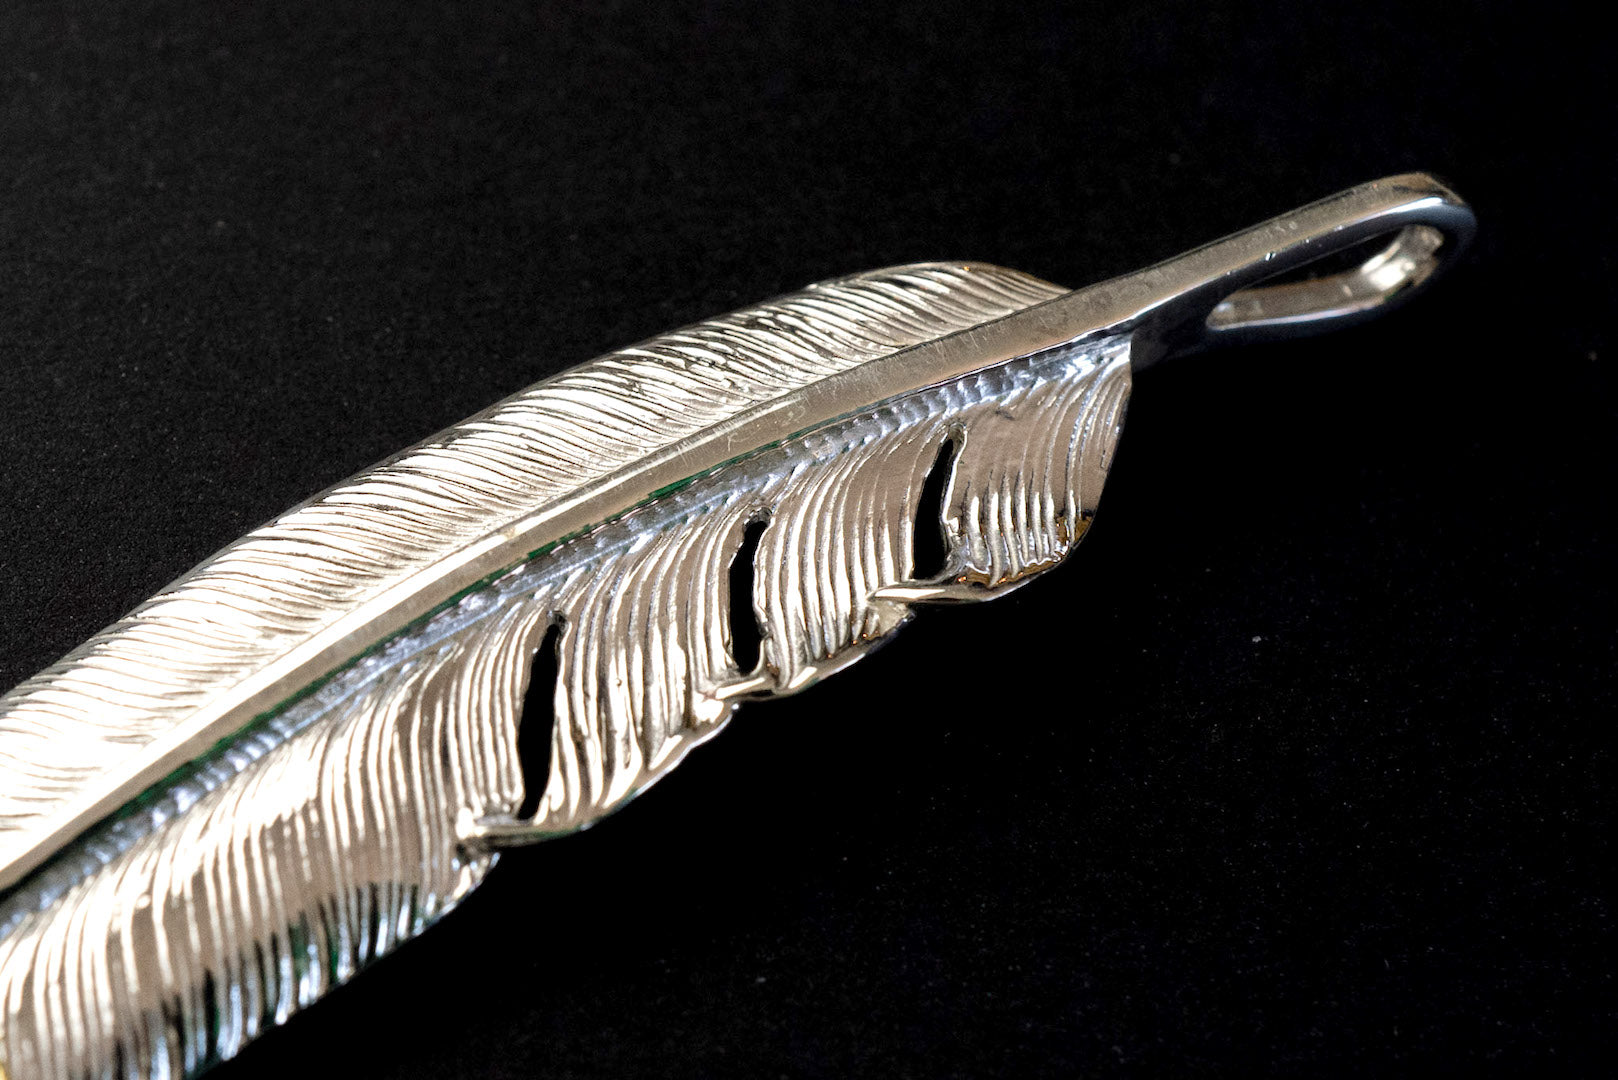 First Arrow's Large Quarter 18k Gold Feather Pendant (P-474)